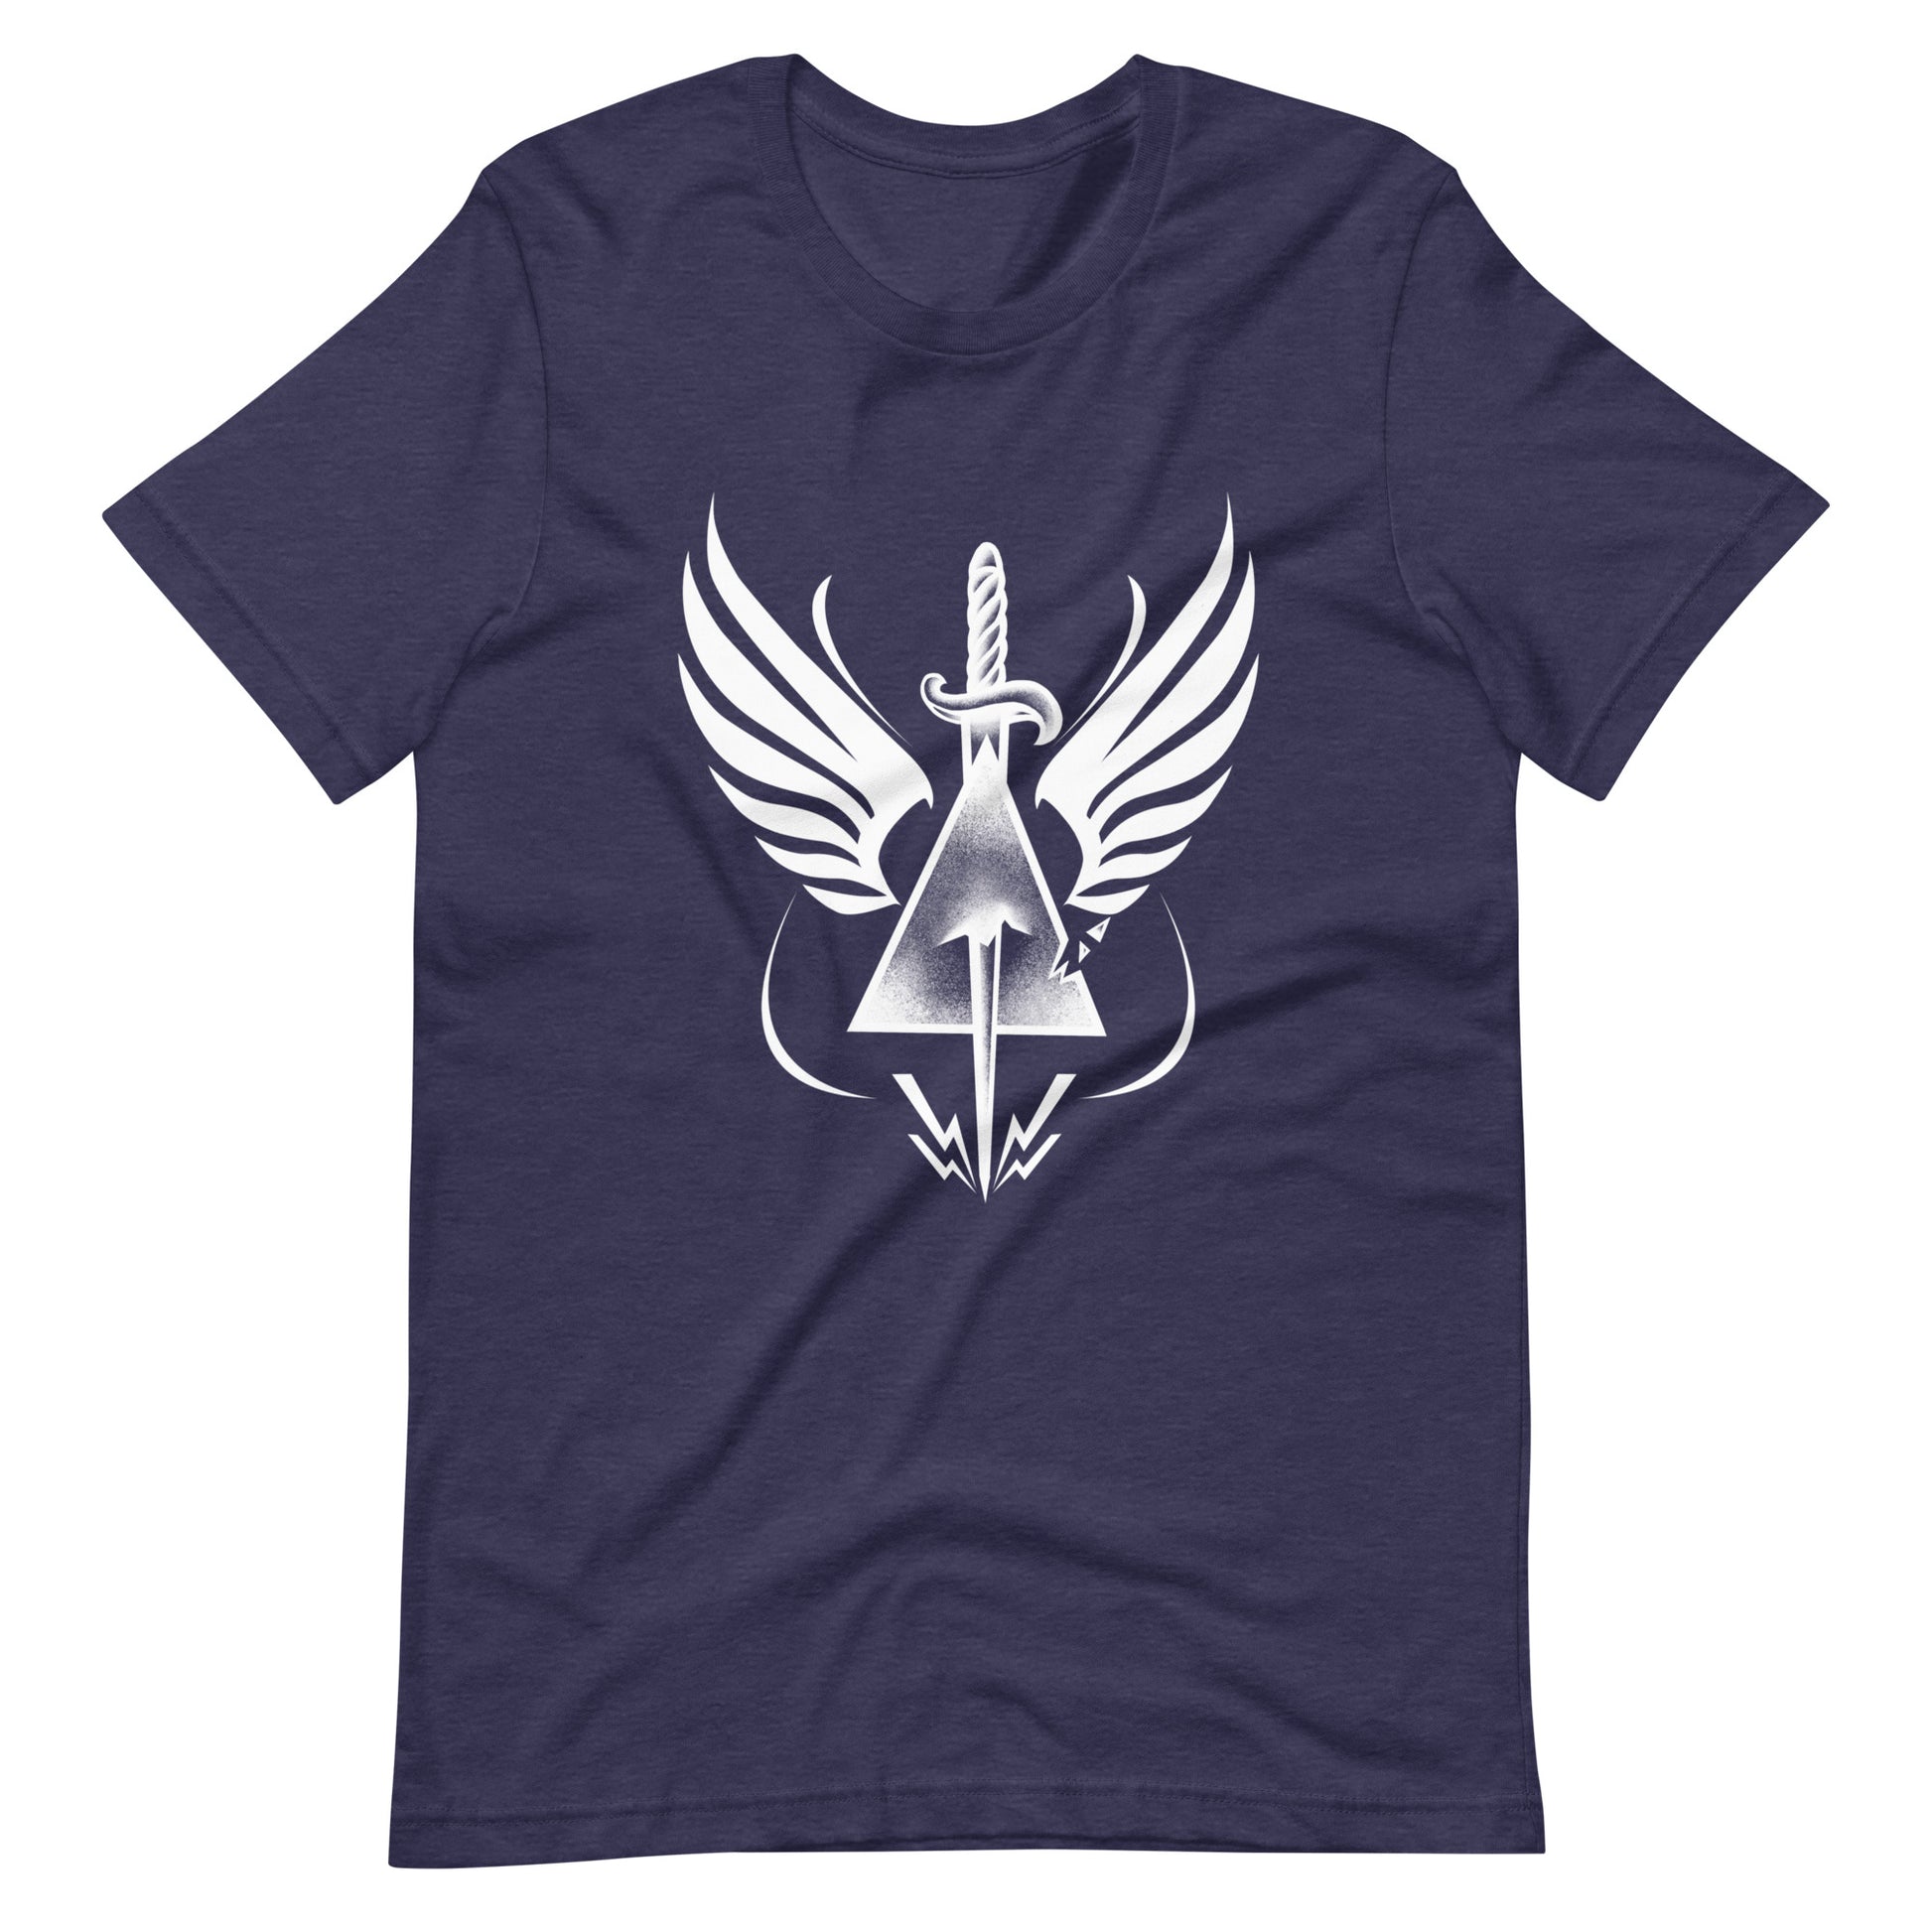 Dead Triangle - Men's t-shirt - Heather Midnight Navy Front